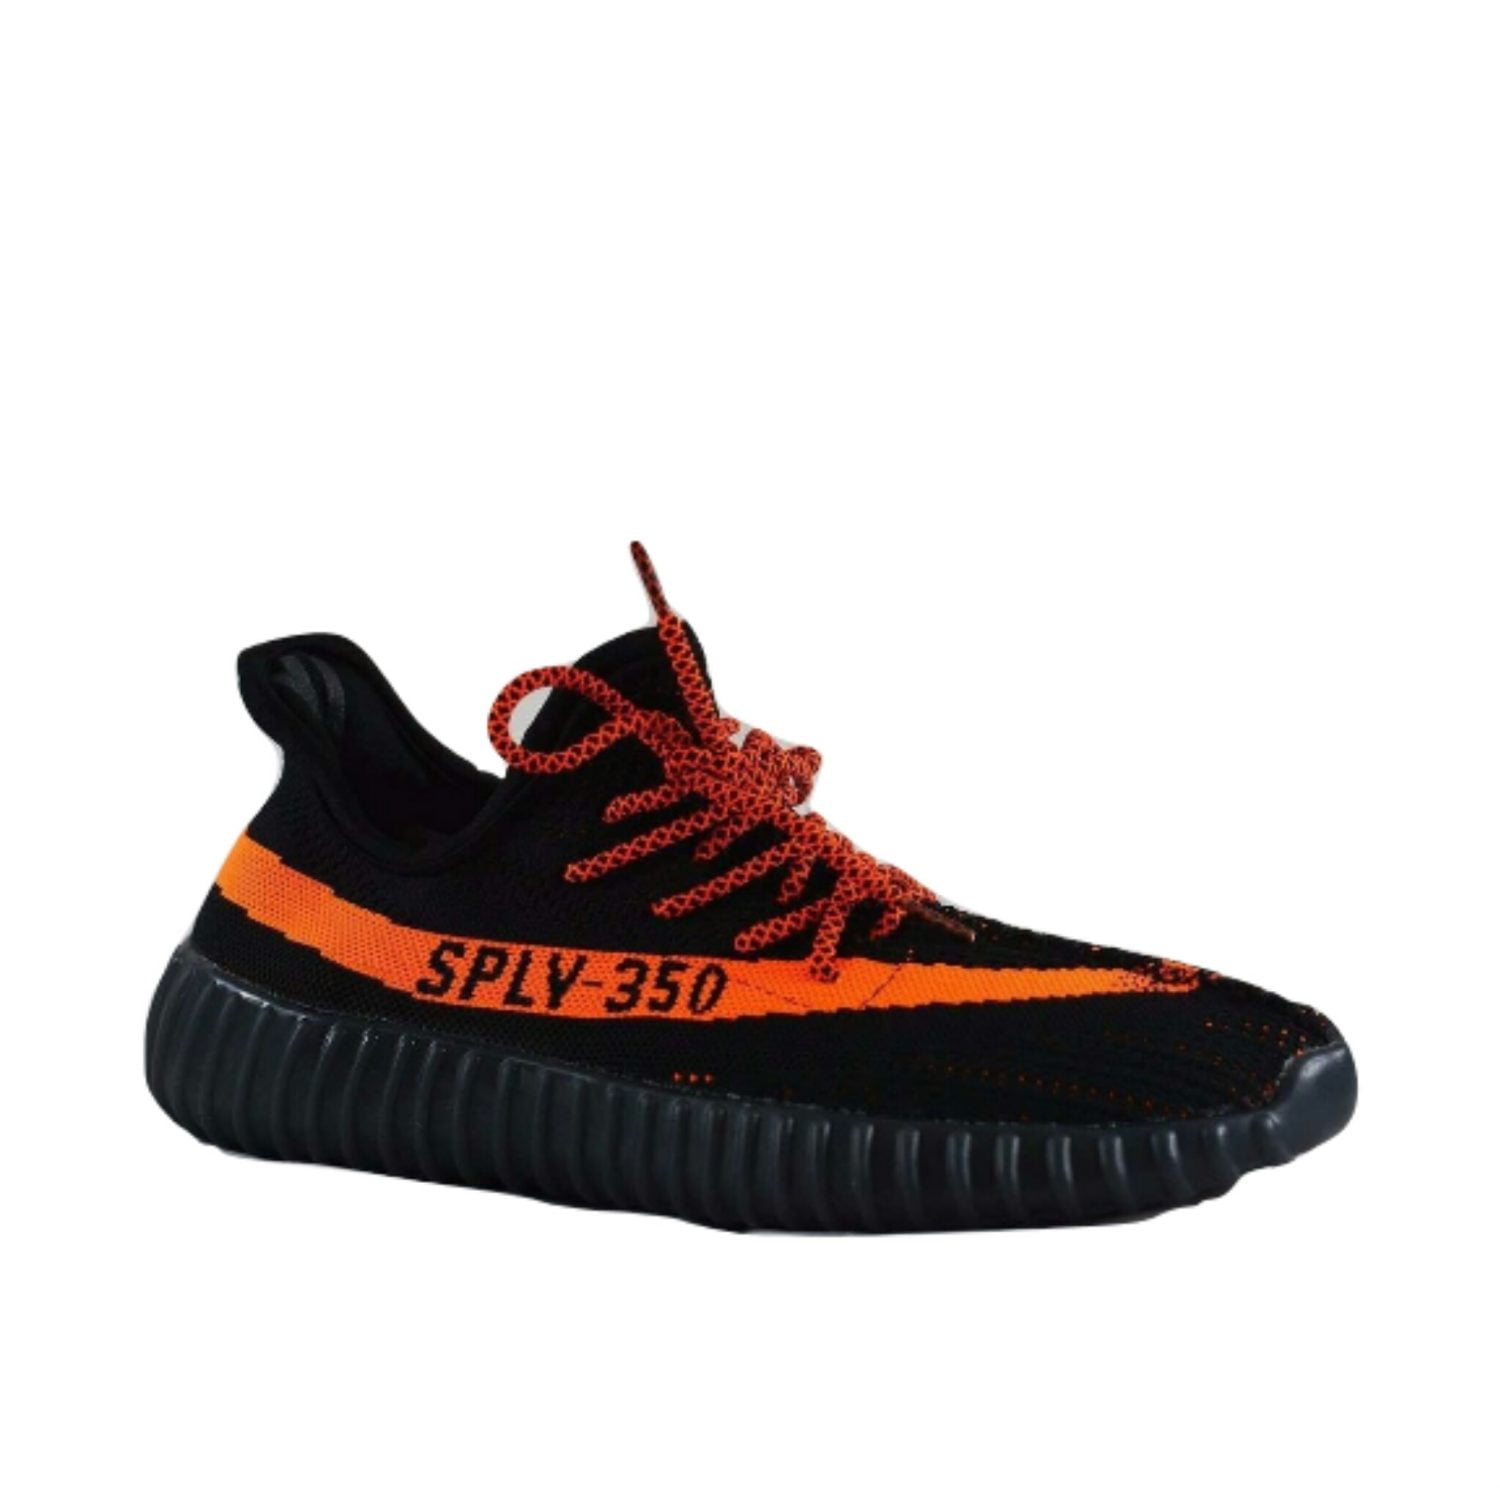 adidas sply 350 black orange